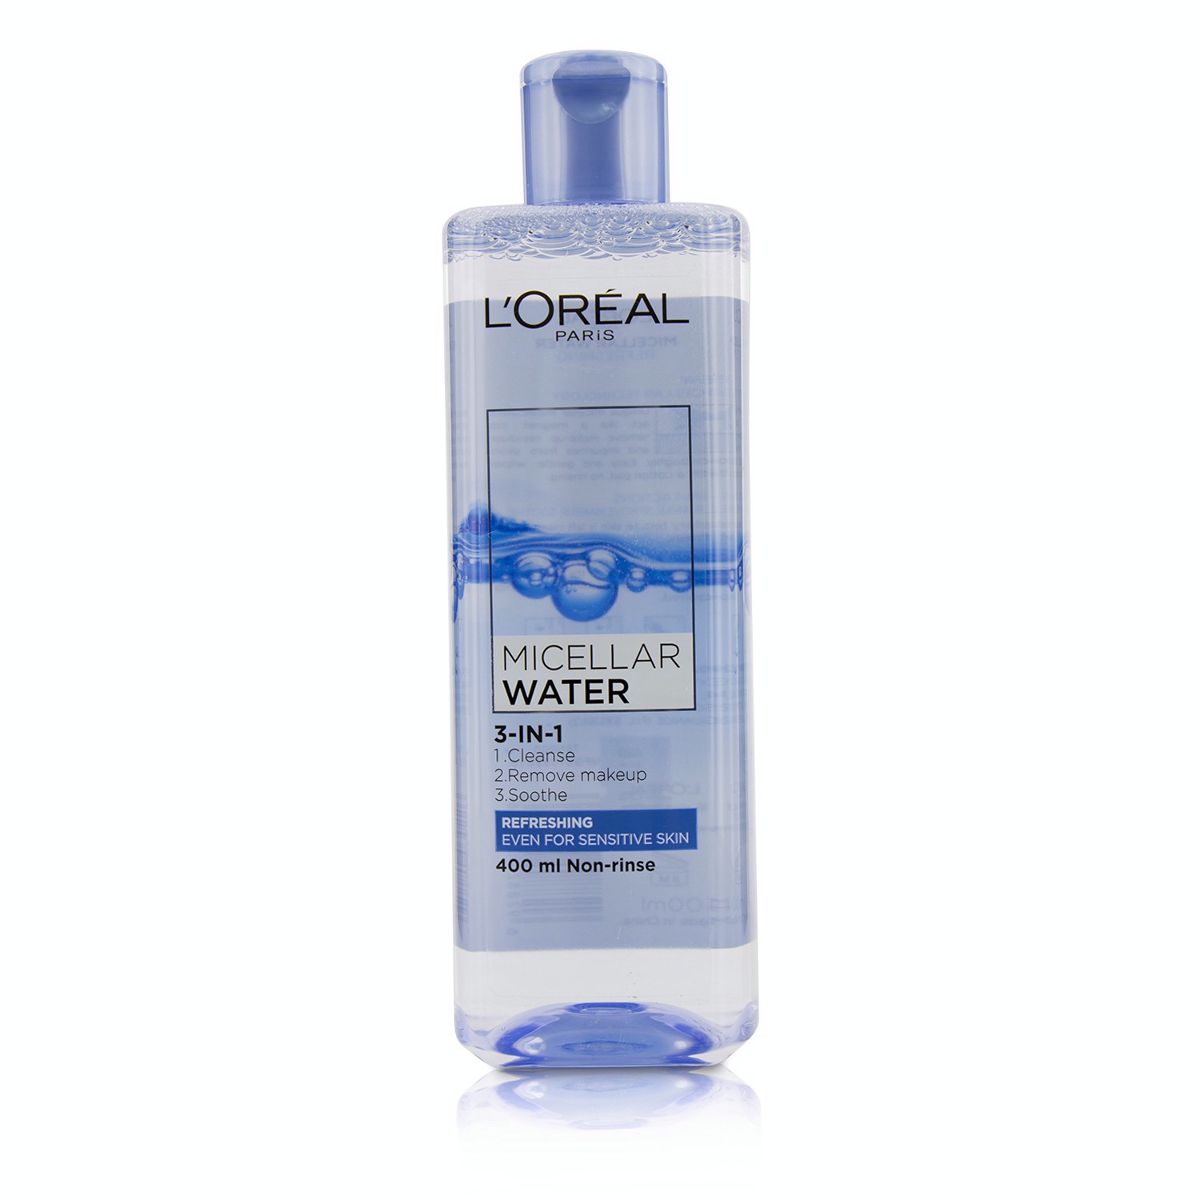 3-In-1 Micellar Water (Refreshing) - Even For Sensitive Skin LOreal Image